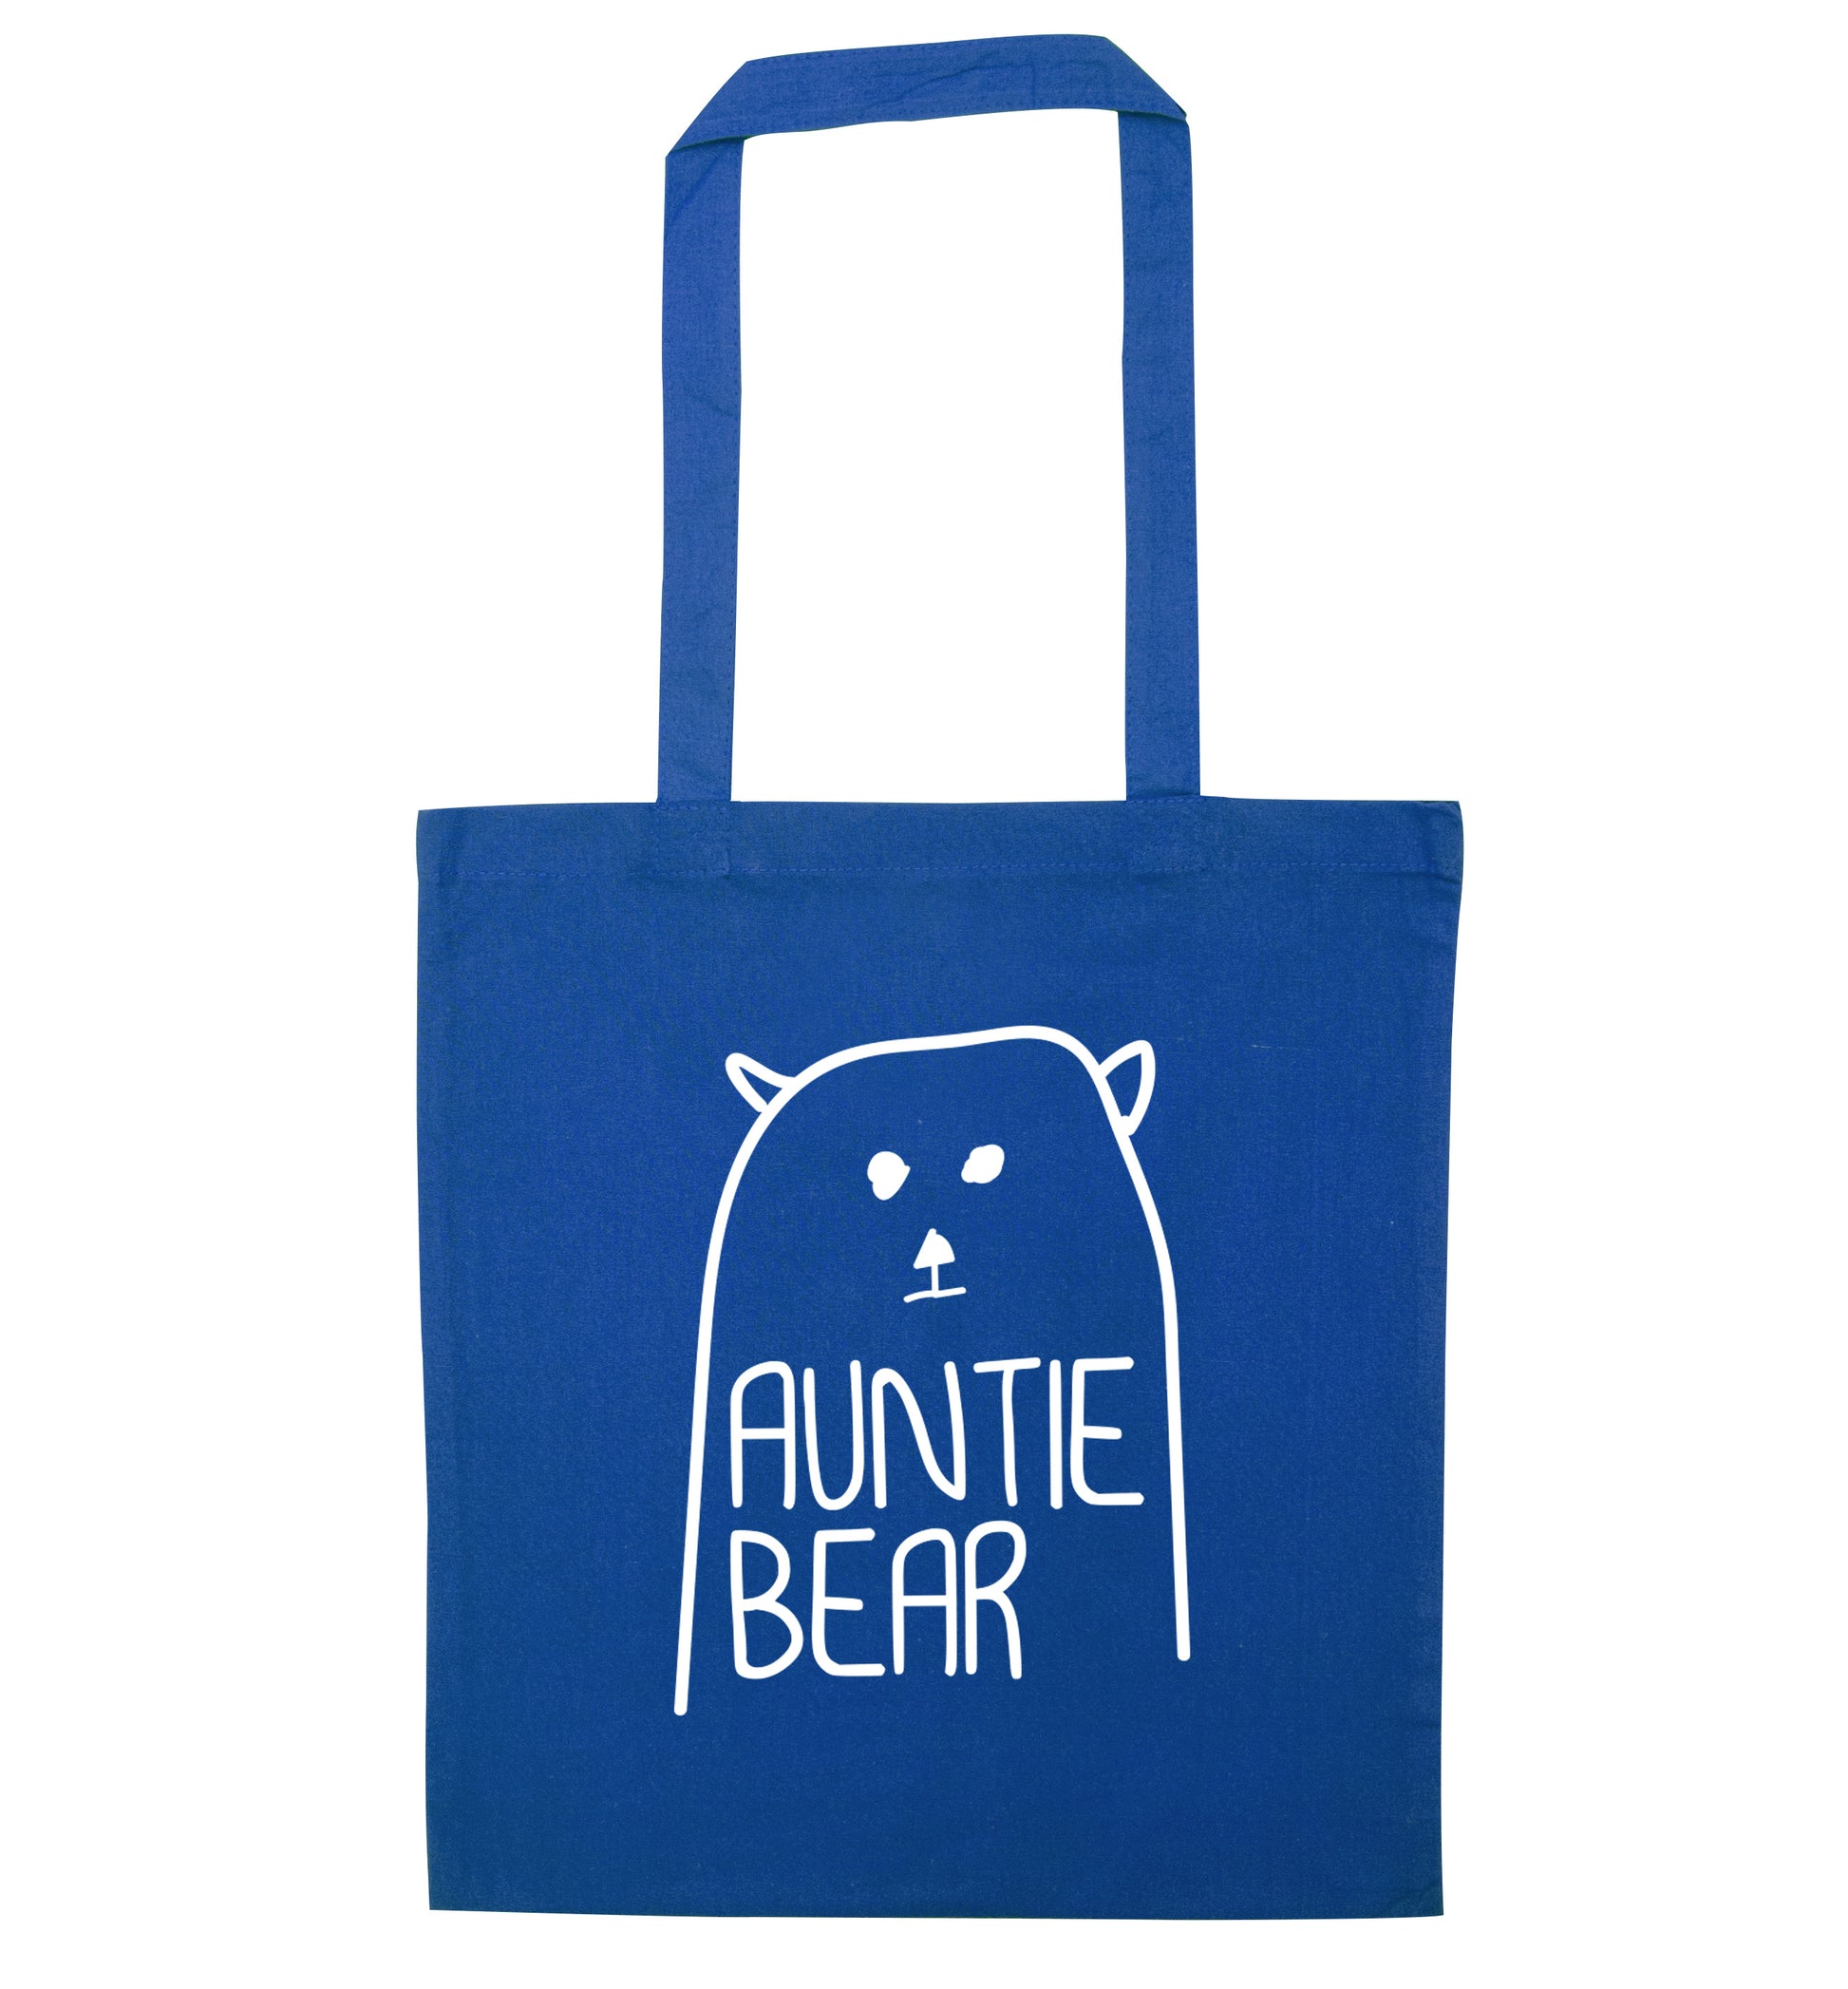 Auntie bear blue tote bag